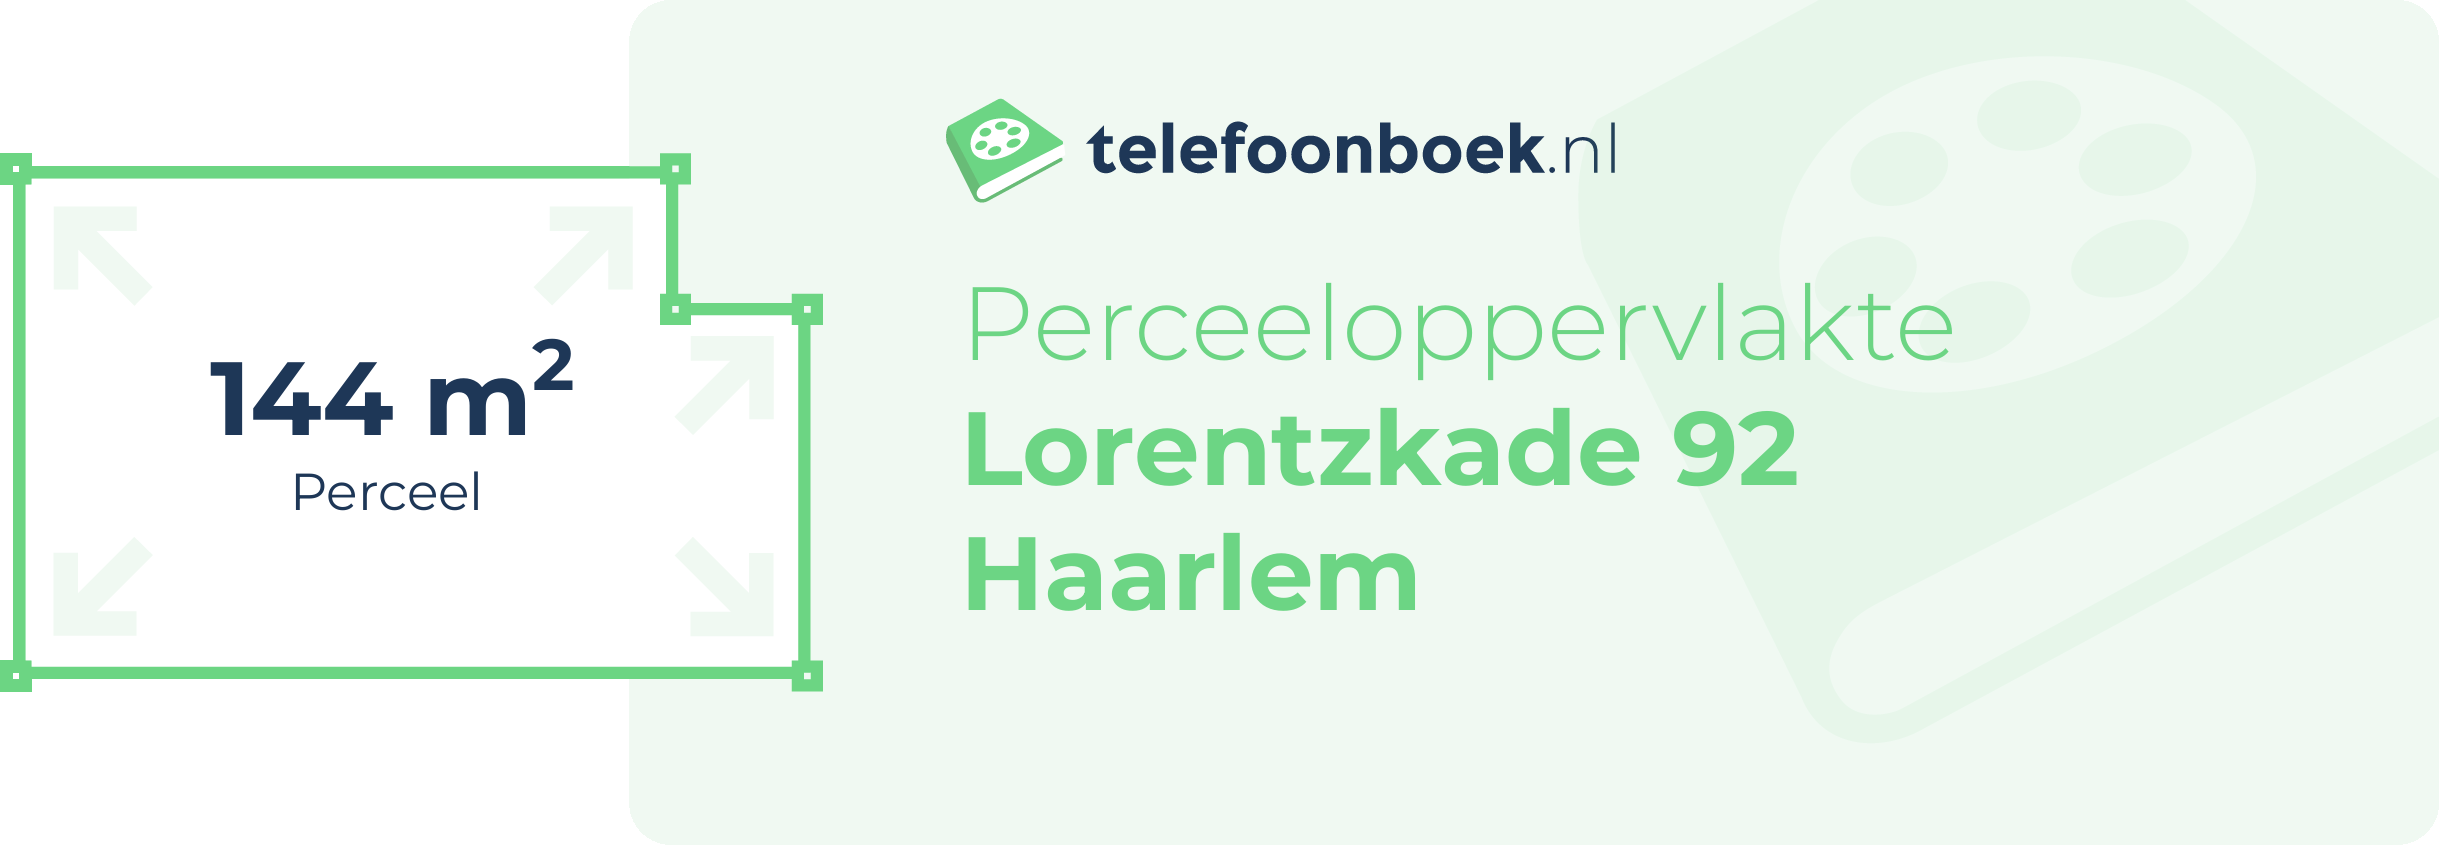 Perceeloppervlakte Lorentzkade 92 Haarlem